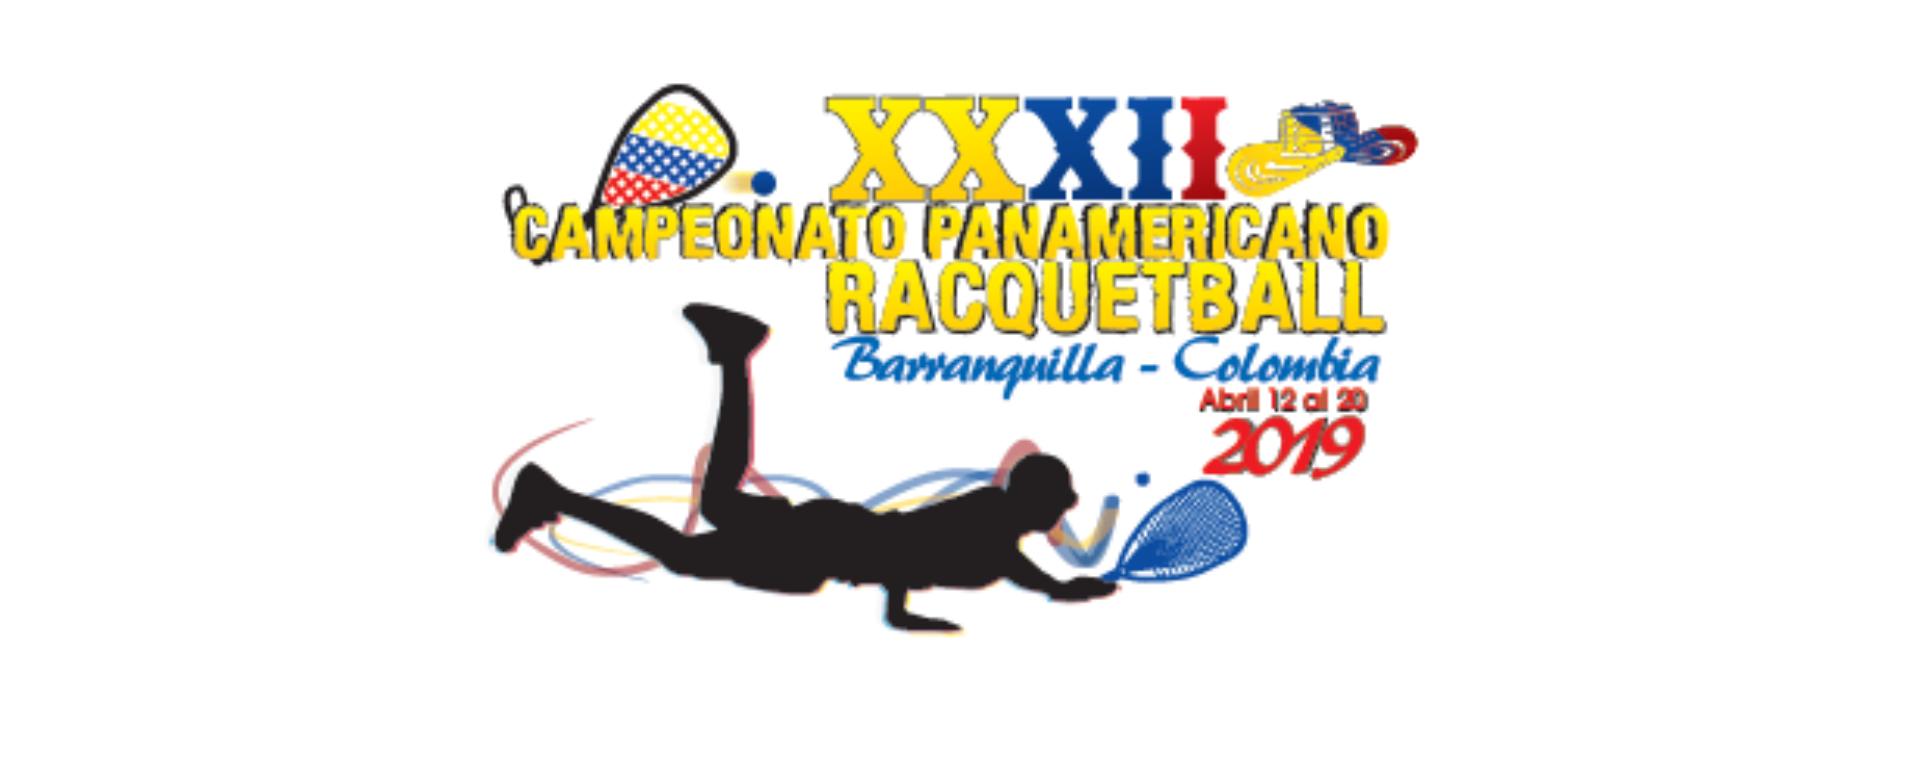 32nd Pan American Racquetball Championship